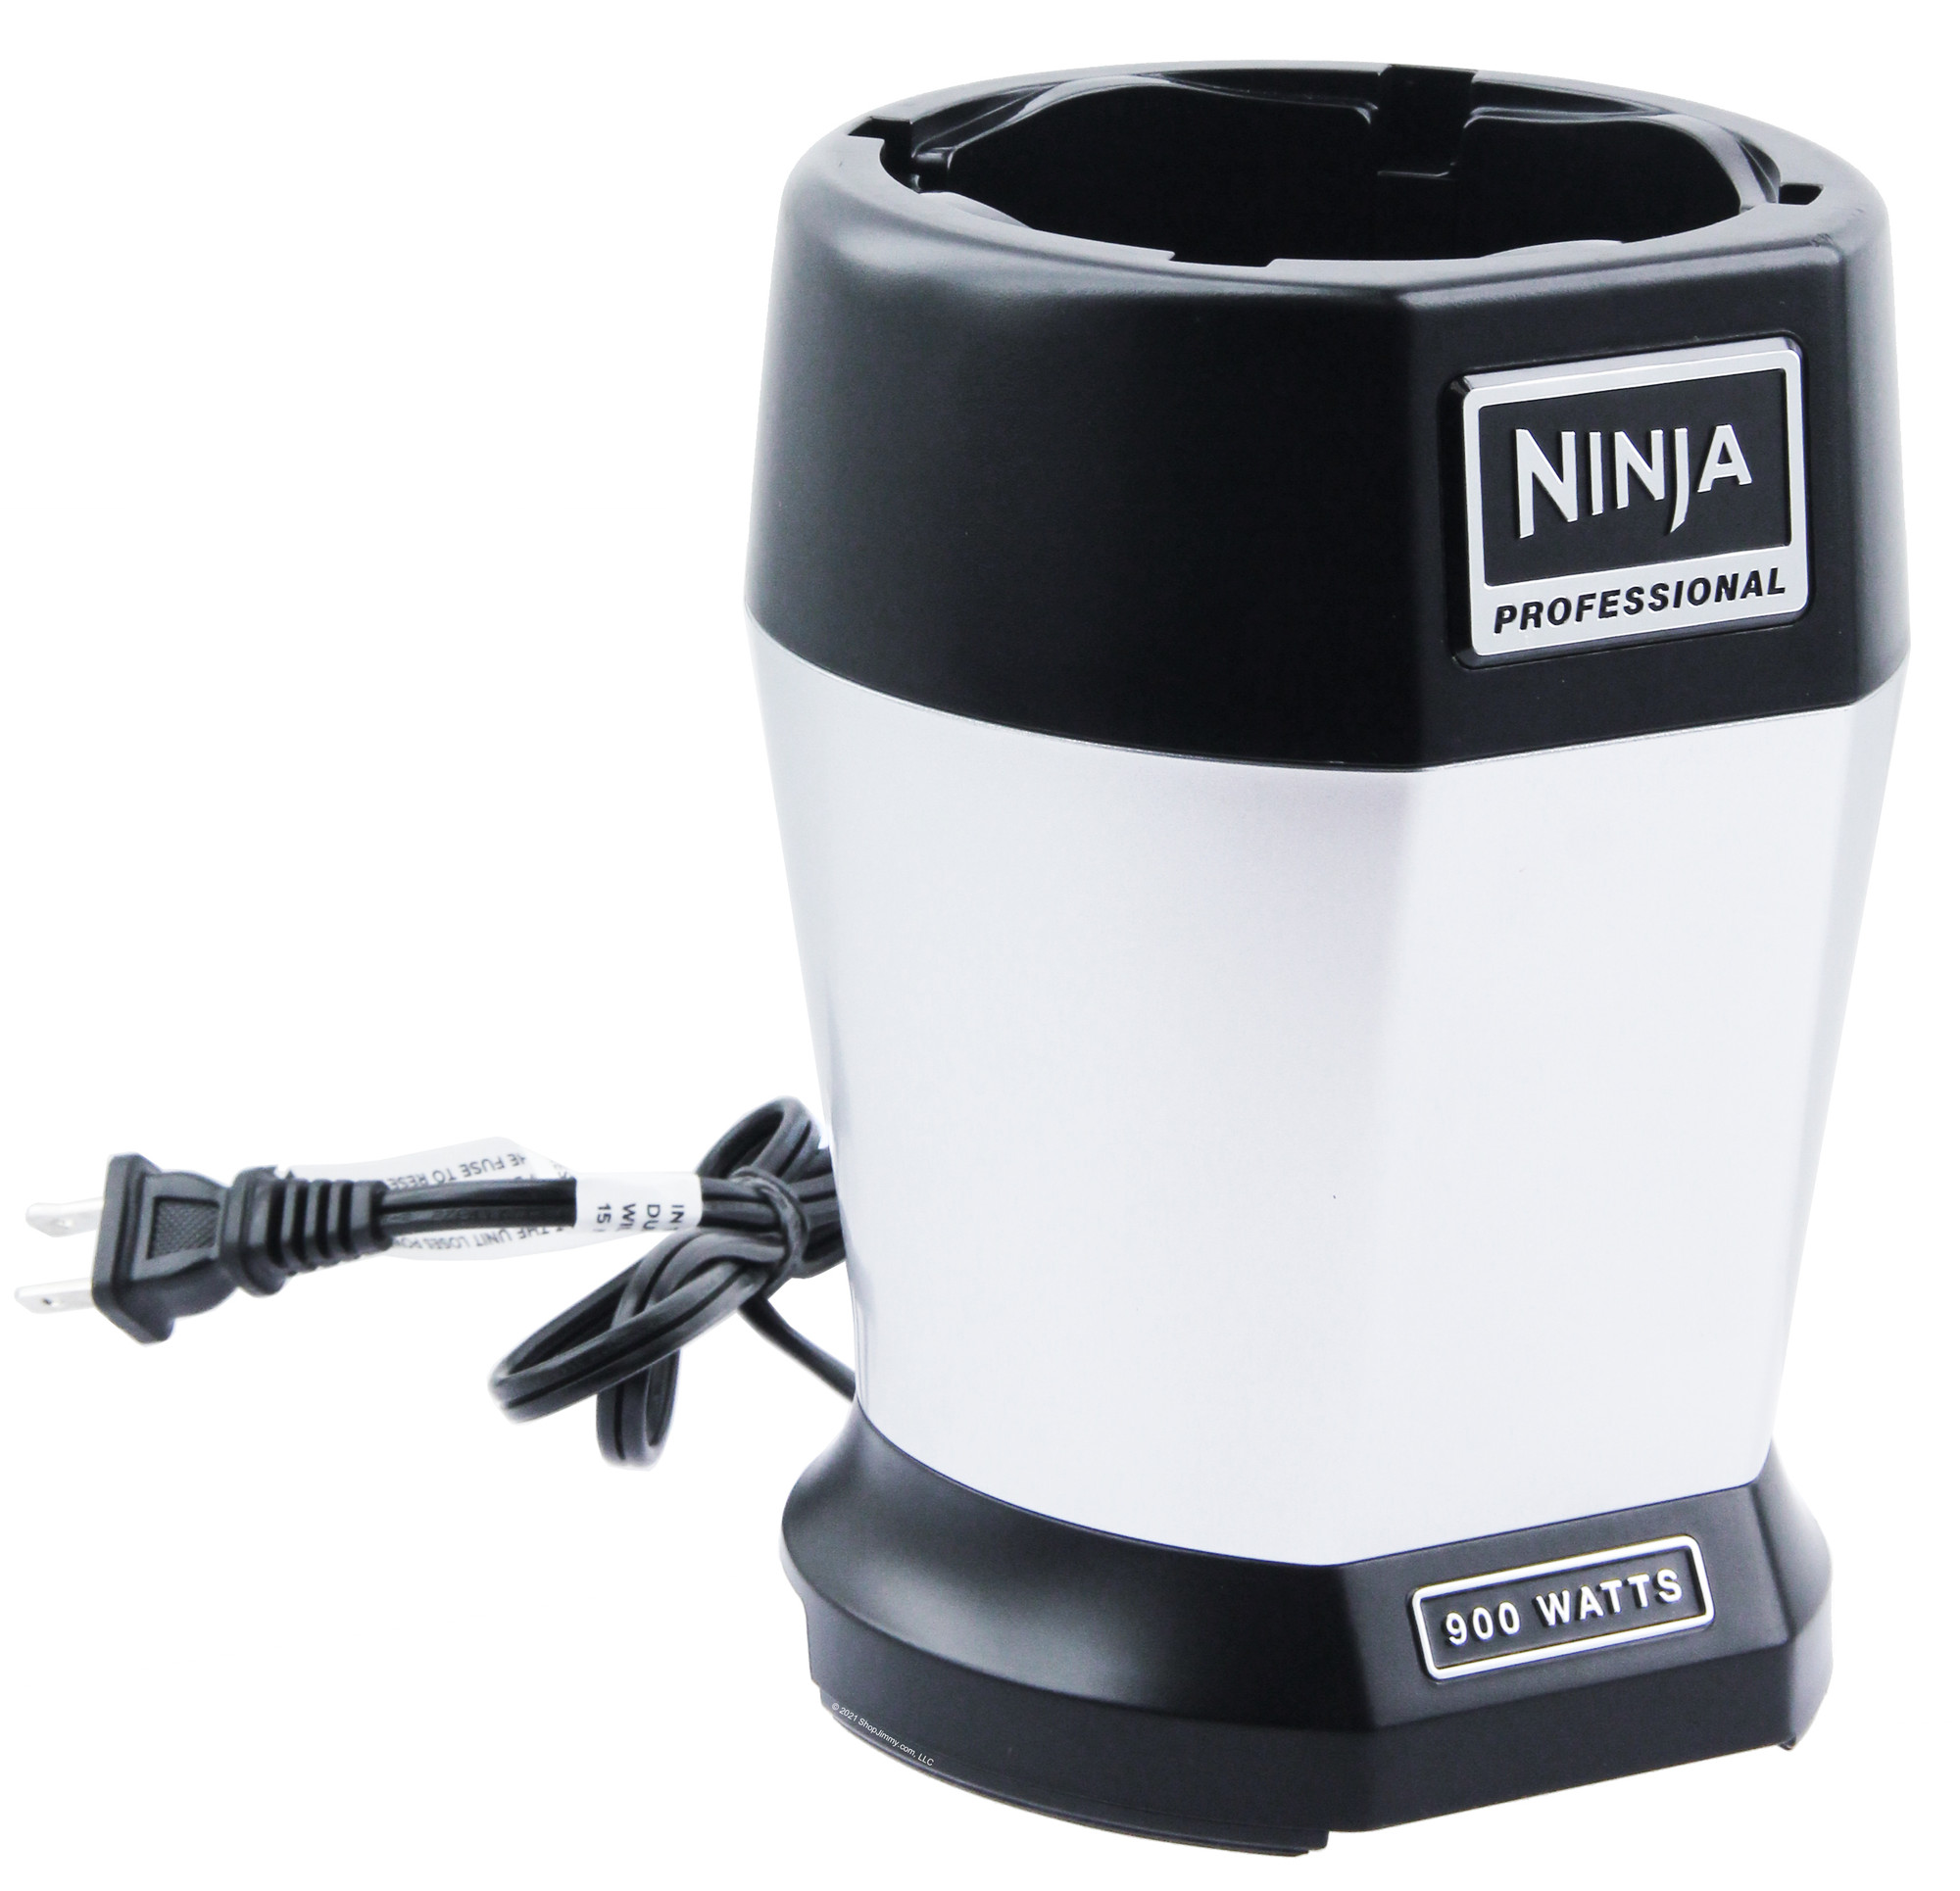 Ninja Nutri Ninja BL450 review: This mini ninja has power if not